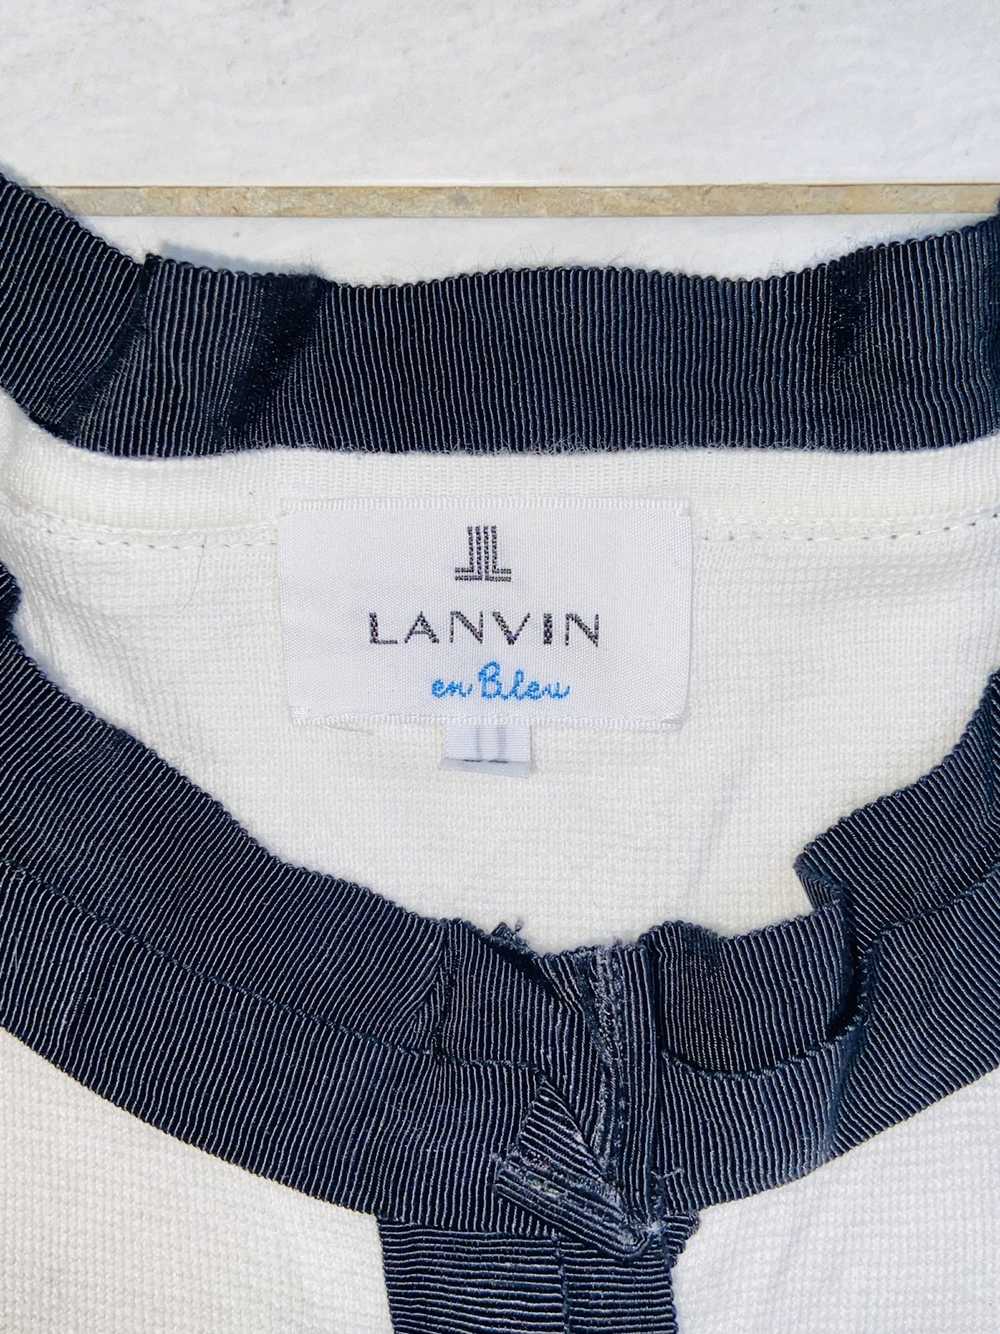 Designer × Lanvin LANVIN EN BLEU White Cardigan - image 9